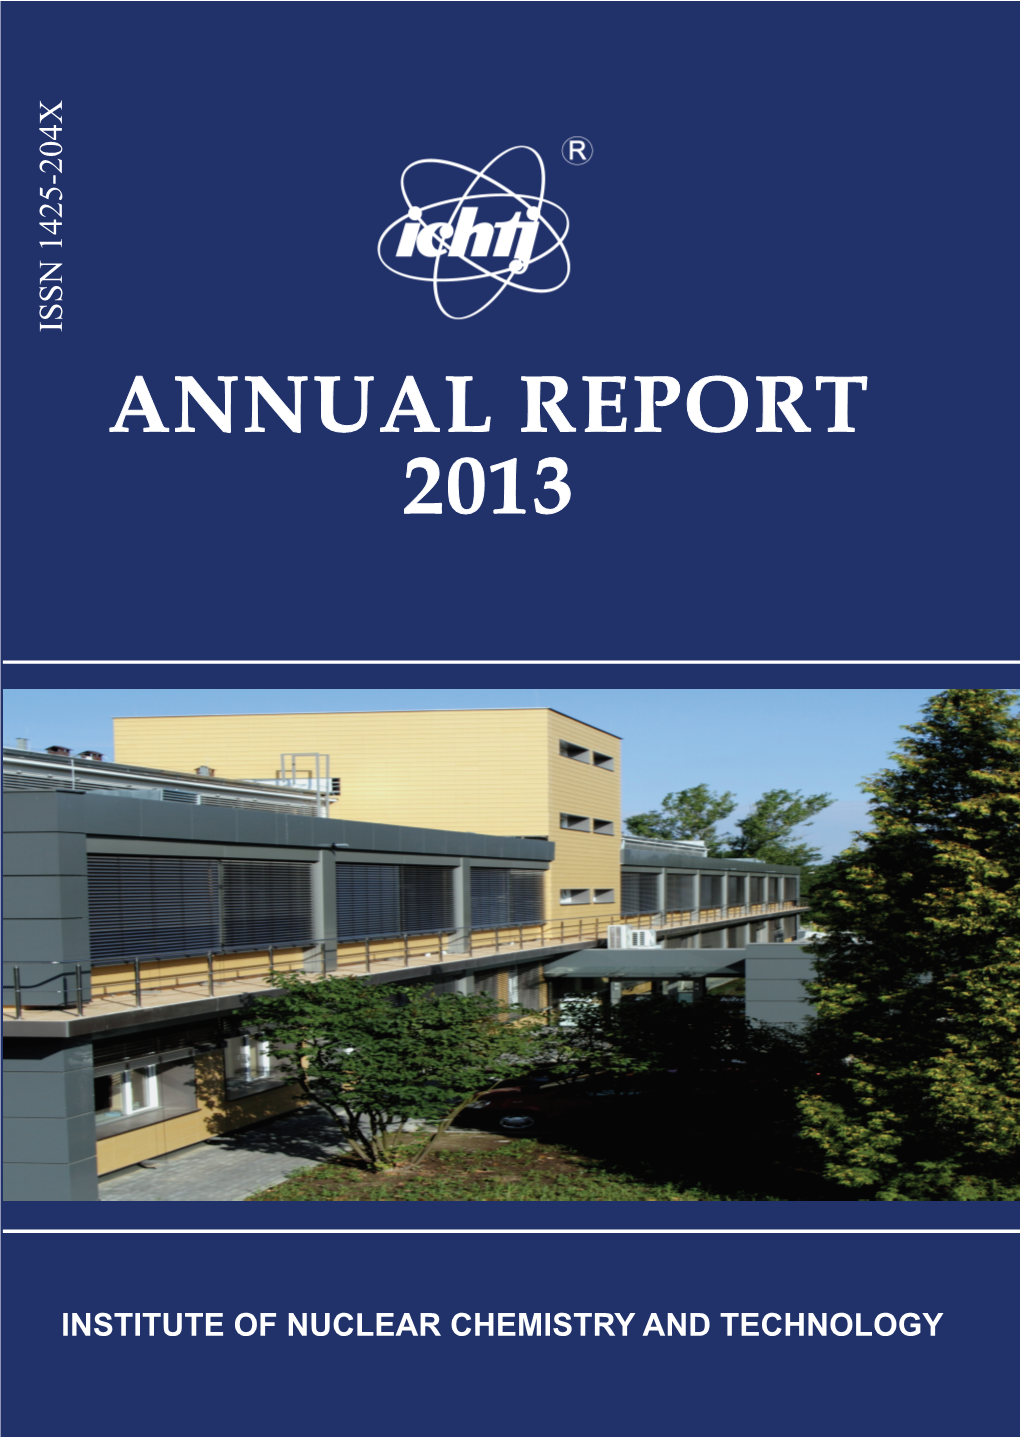 INCT Annual Report 2013